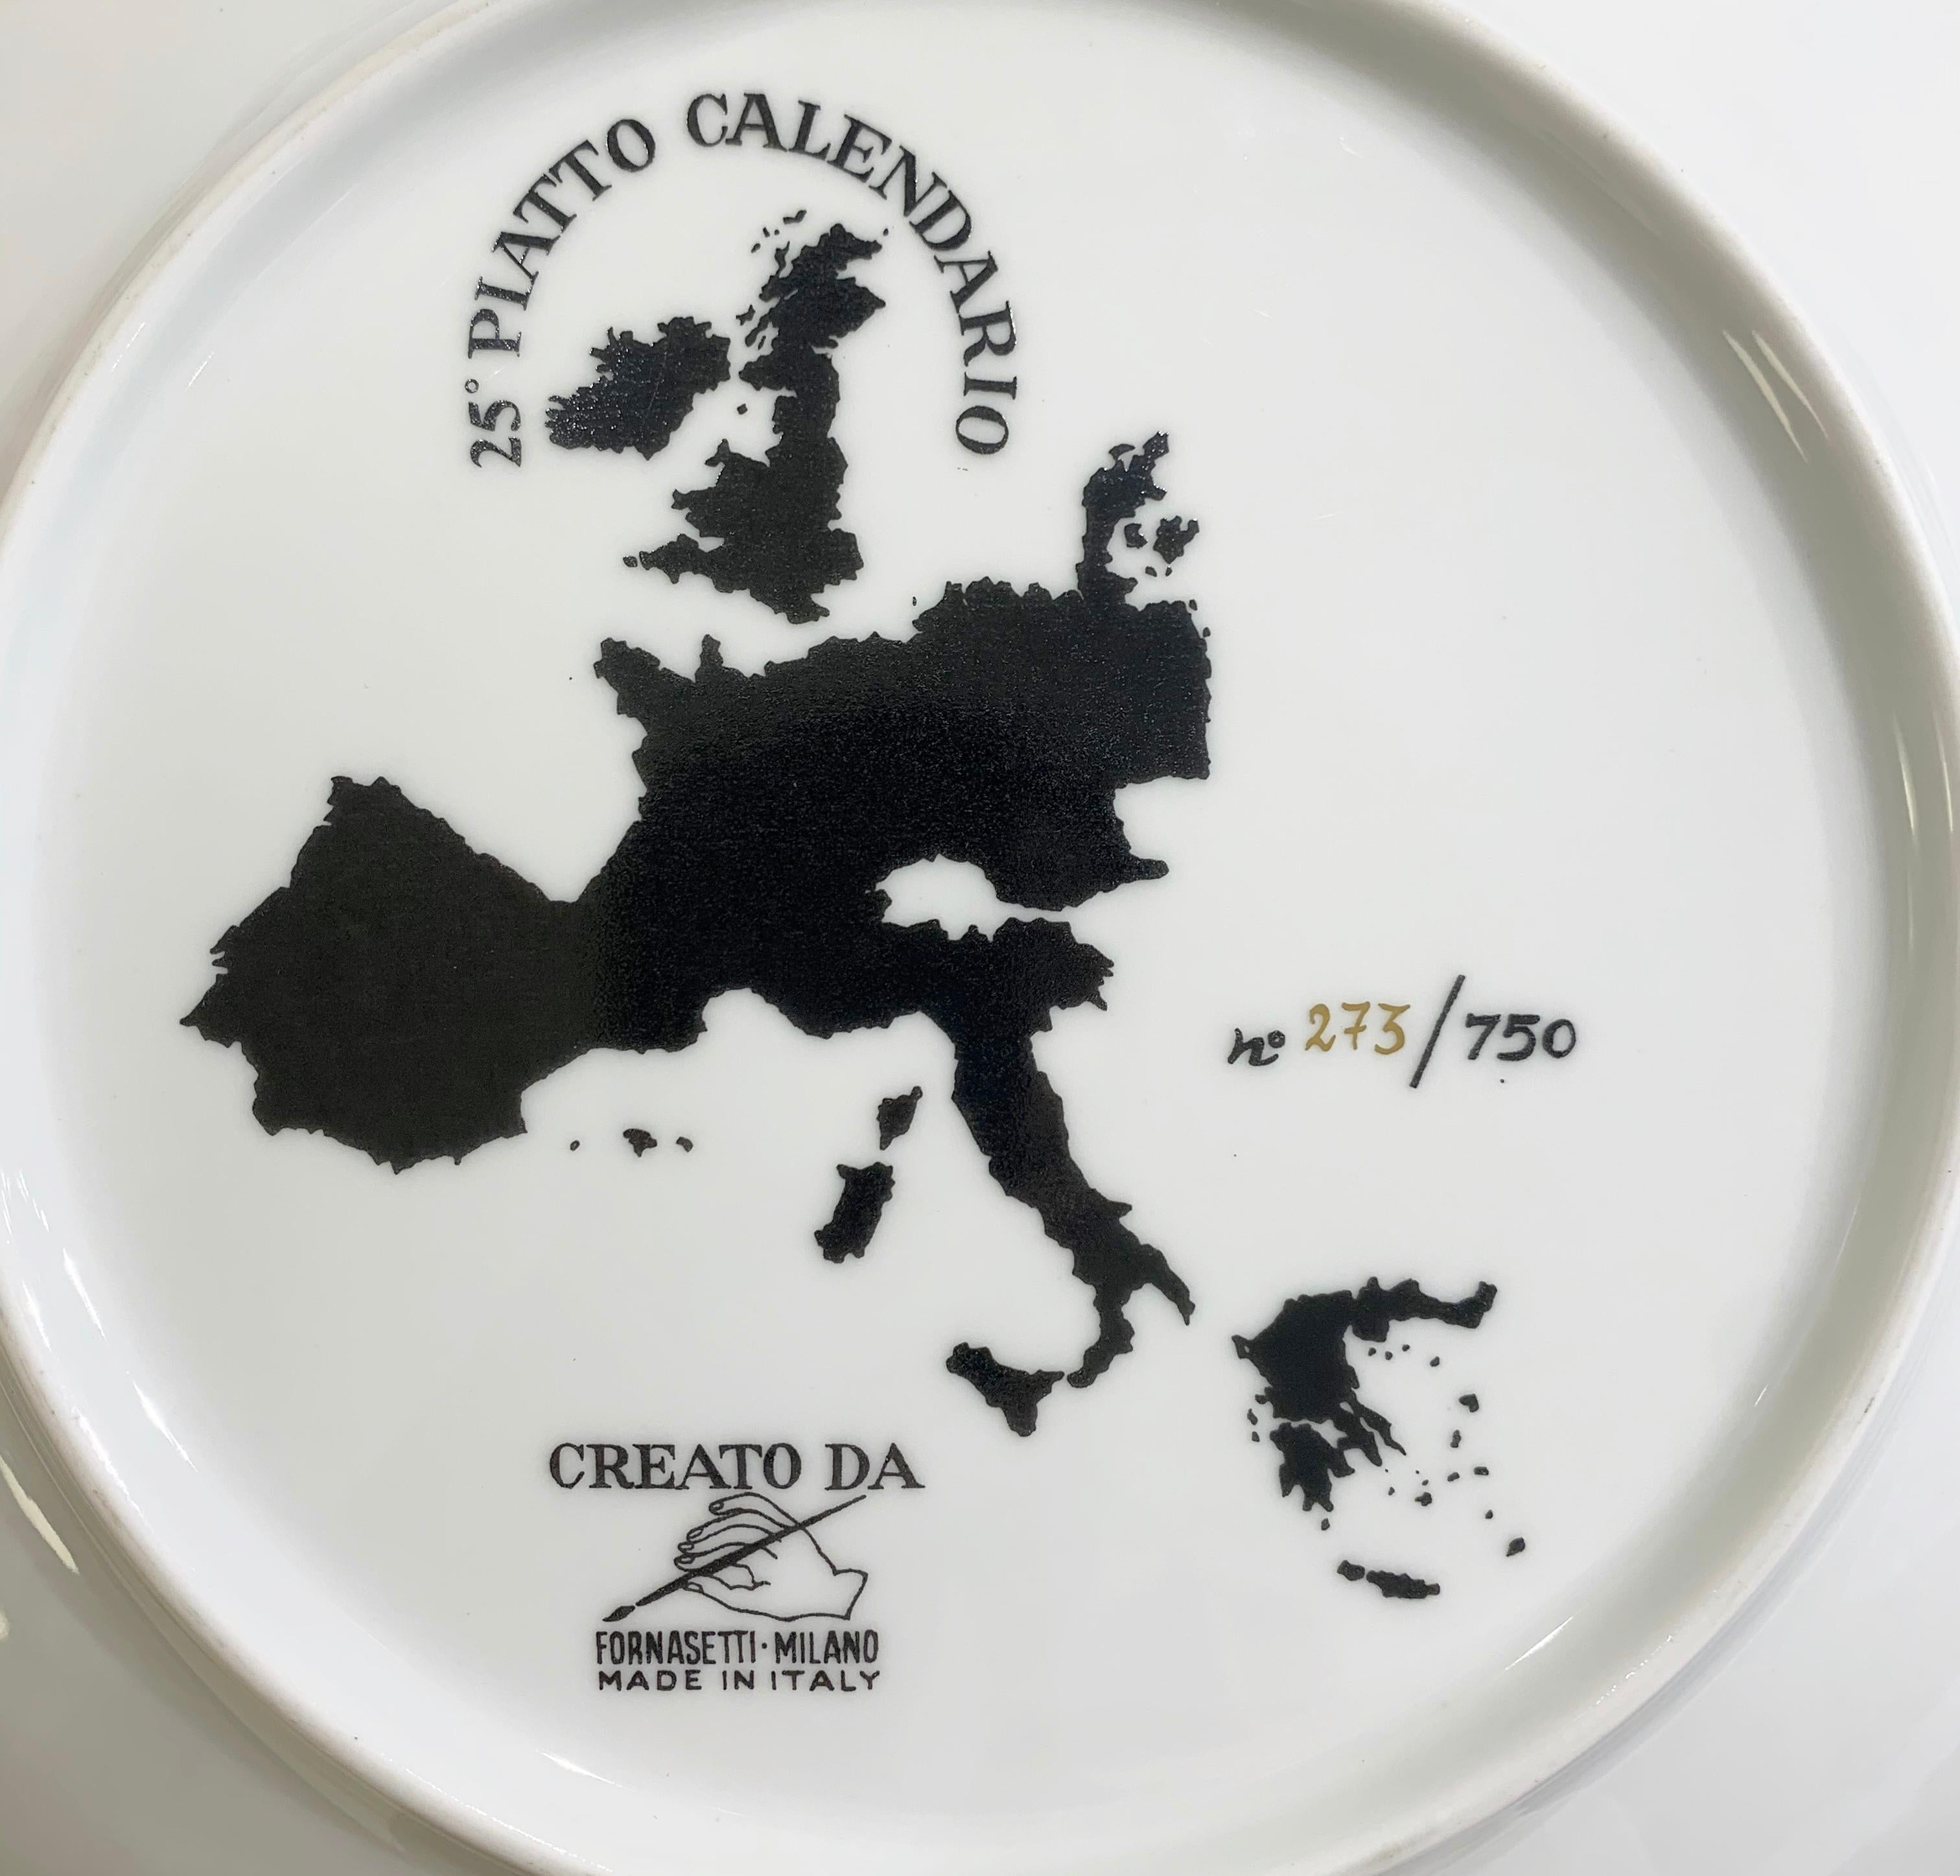 Piero Fornasetti calendar porcelain plate for the Year 1992.